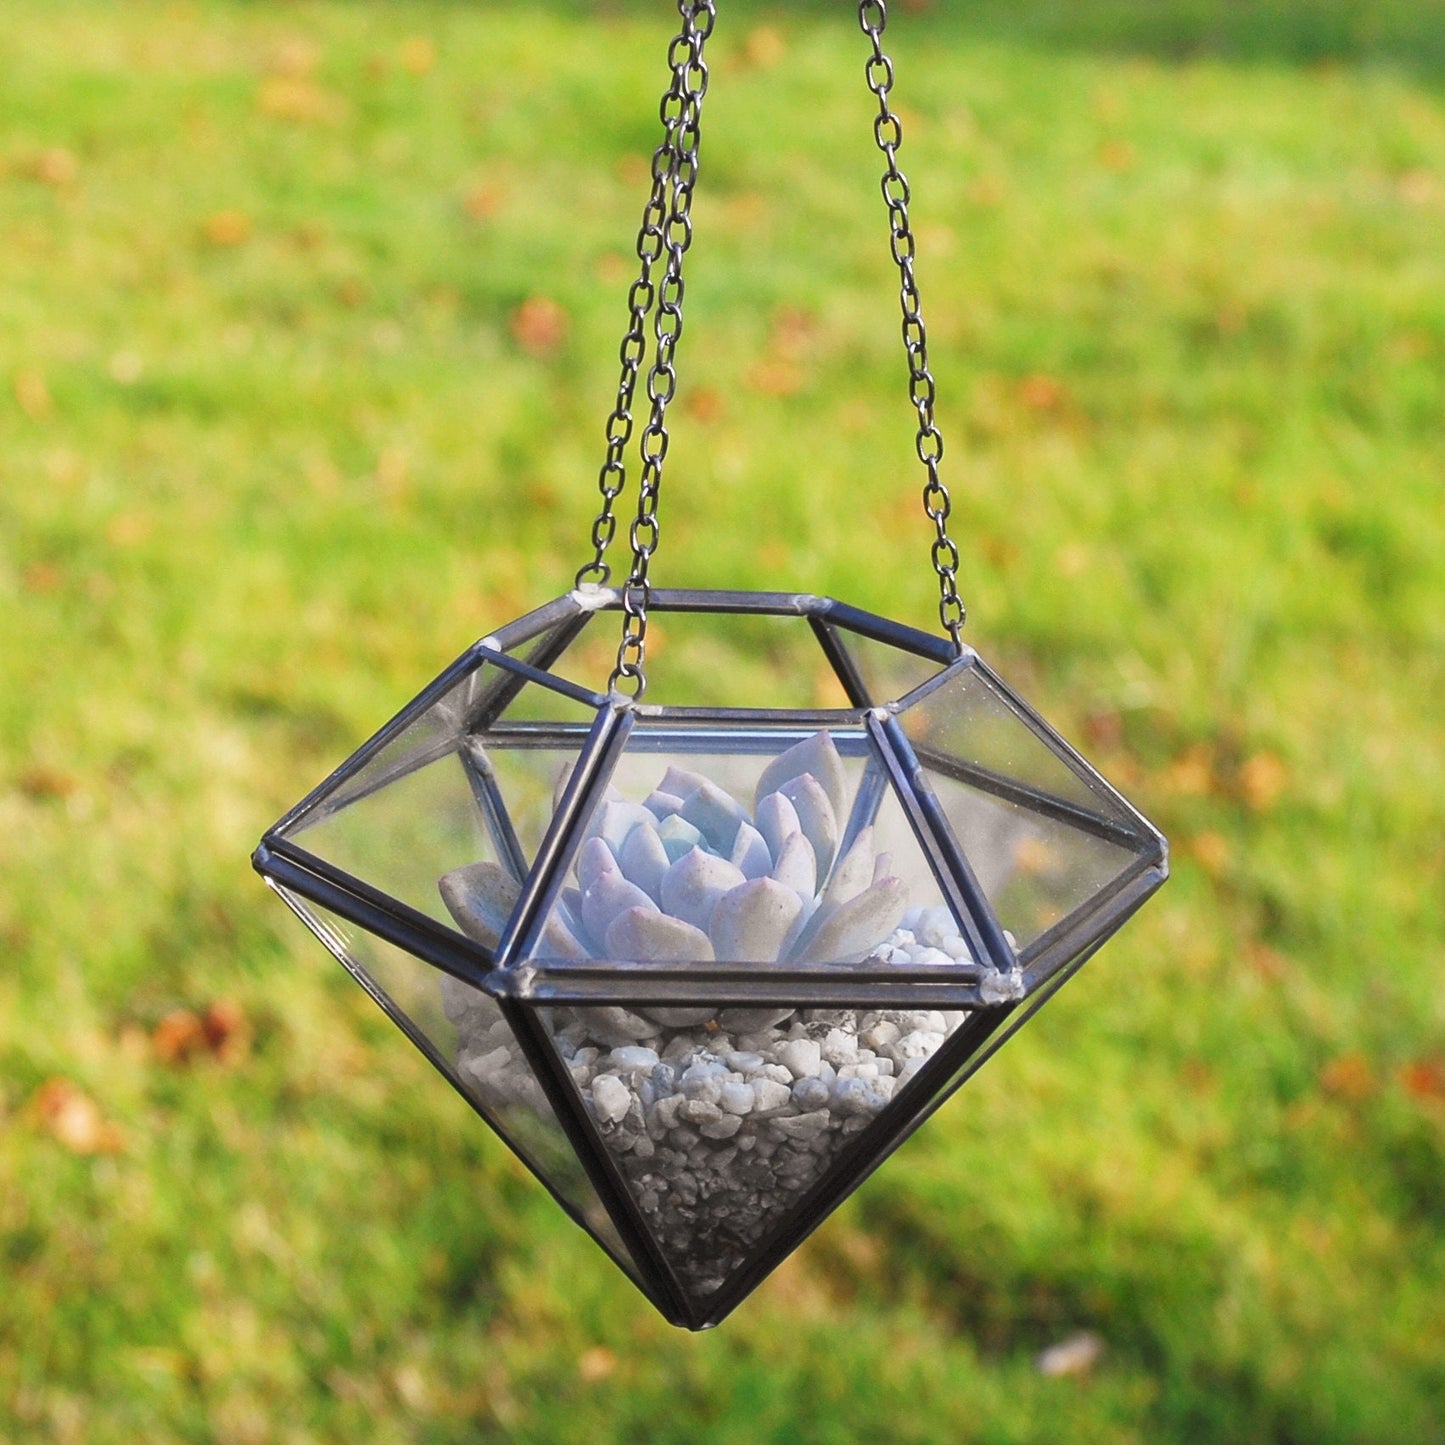 Succulent Terrarium Kit in a Hanging Diamond Shaped Glass Vase